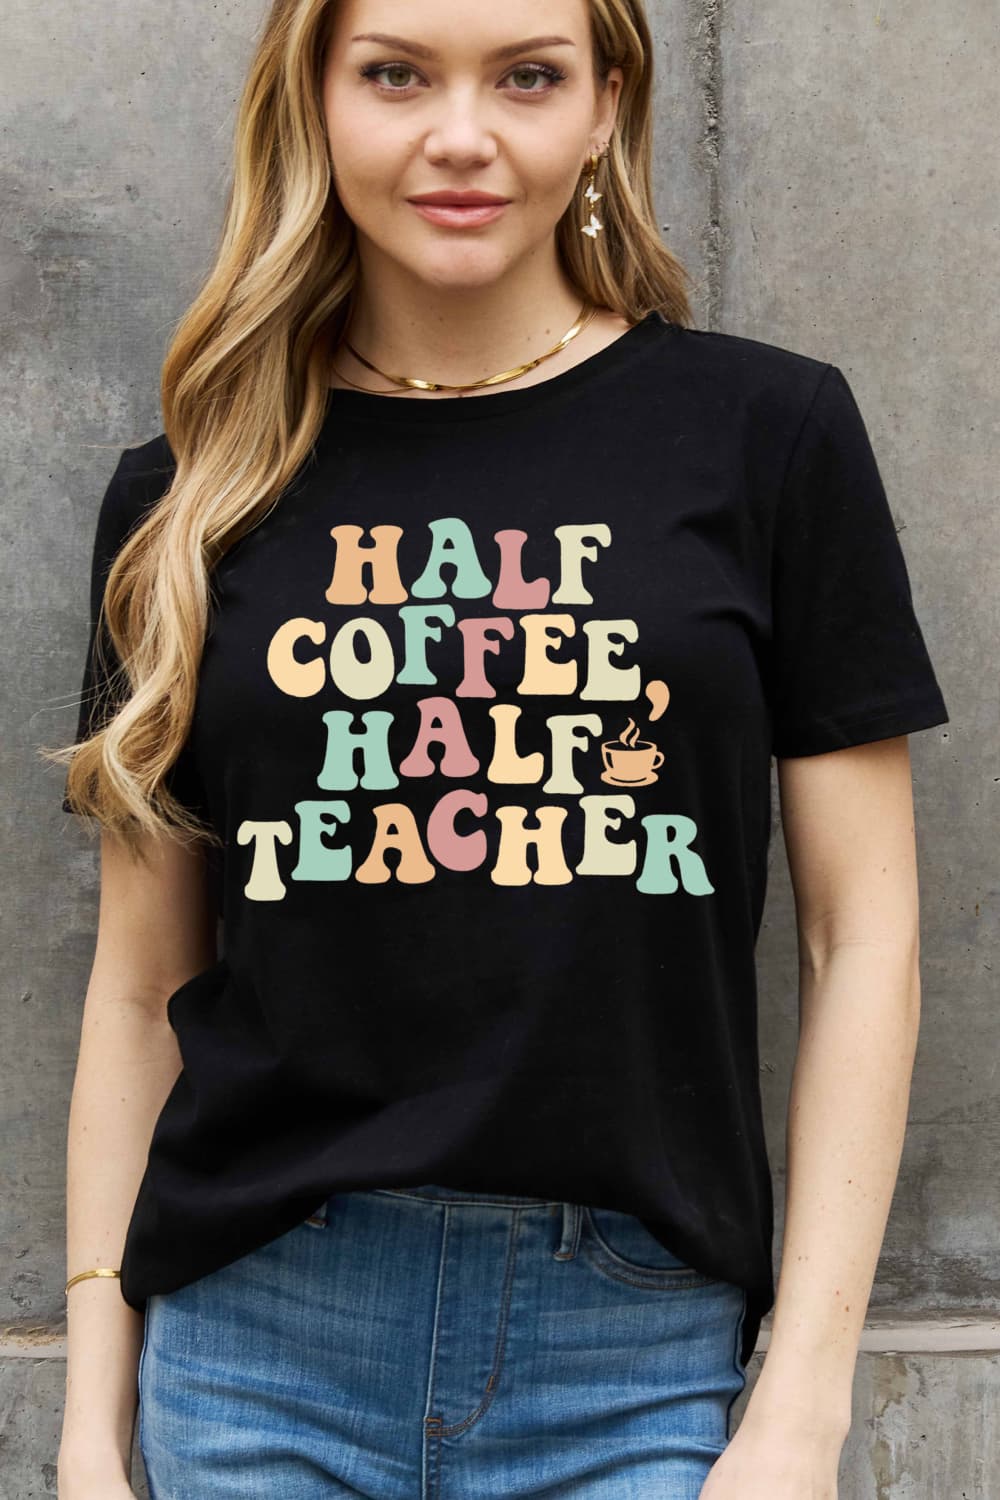 Simply Love Full Size HALF COFFEE HALF TEACHER Graphic Cotton Tee (3 Colors)  Krazy Heart Designs Boutique Black S 